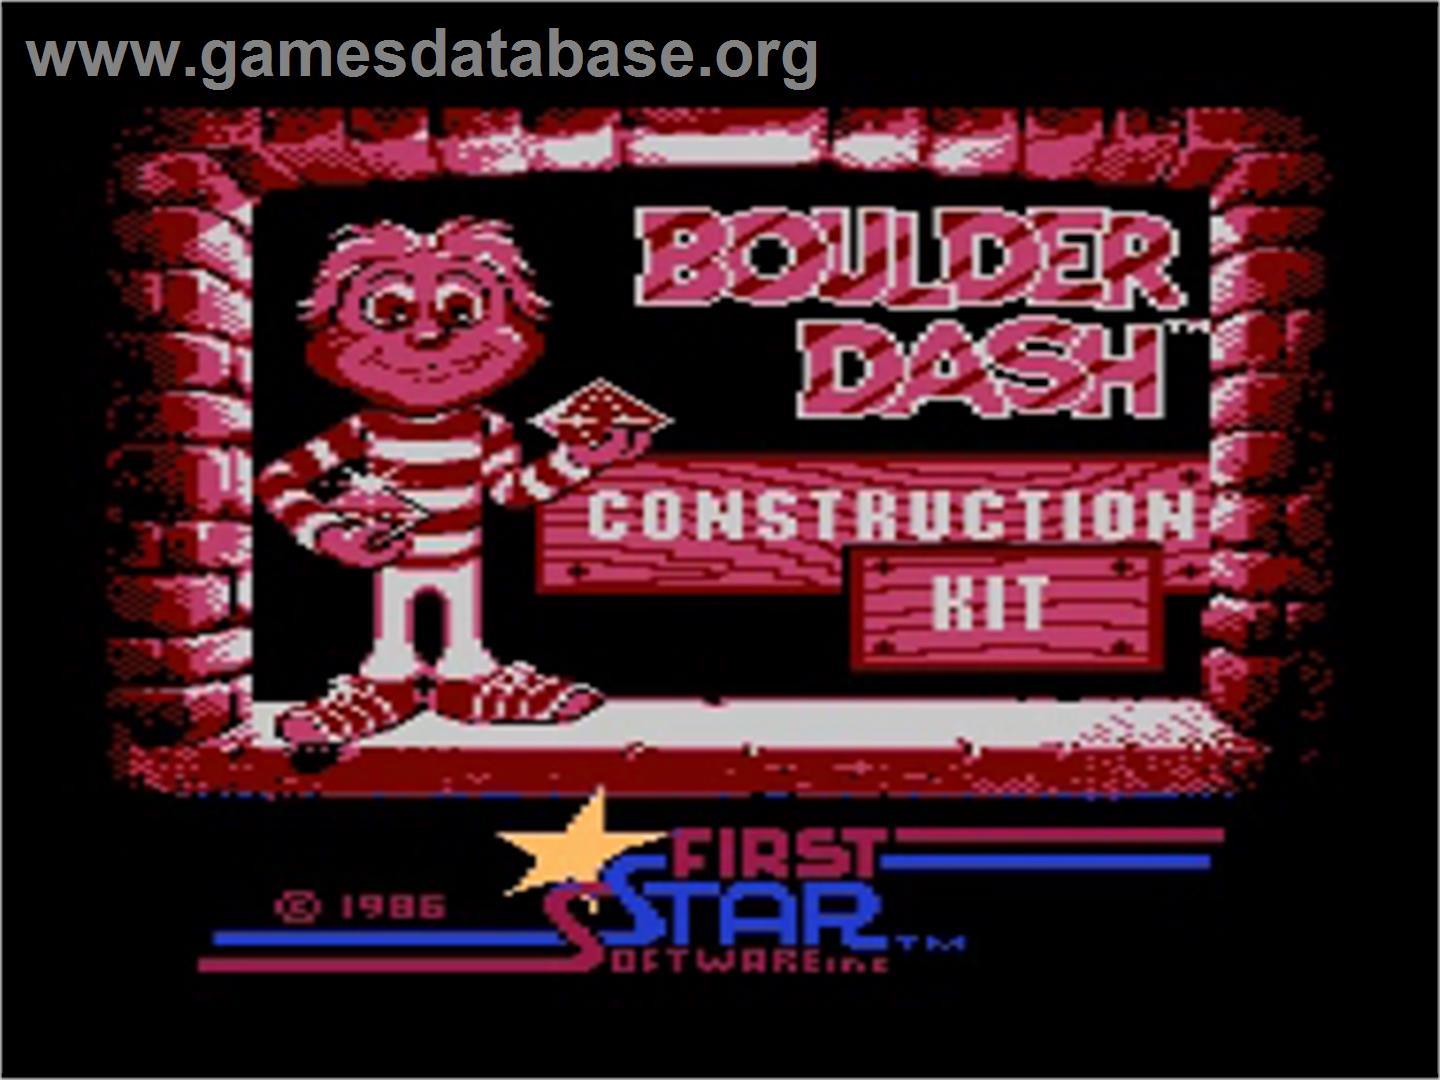 Boulder Dash Construction Kit - Atari 8-bit - Artwork - Title Screen